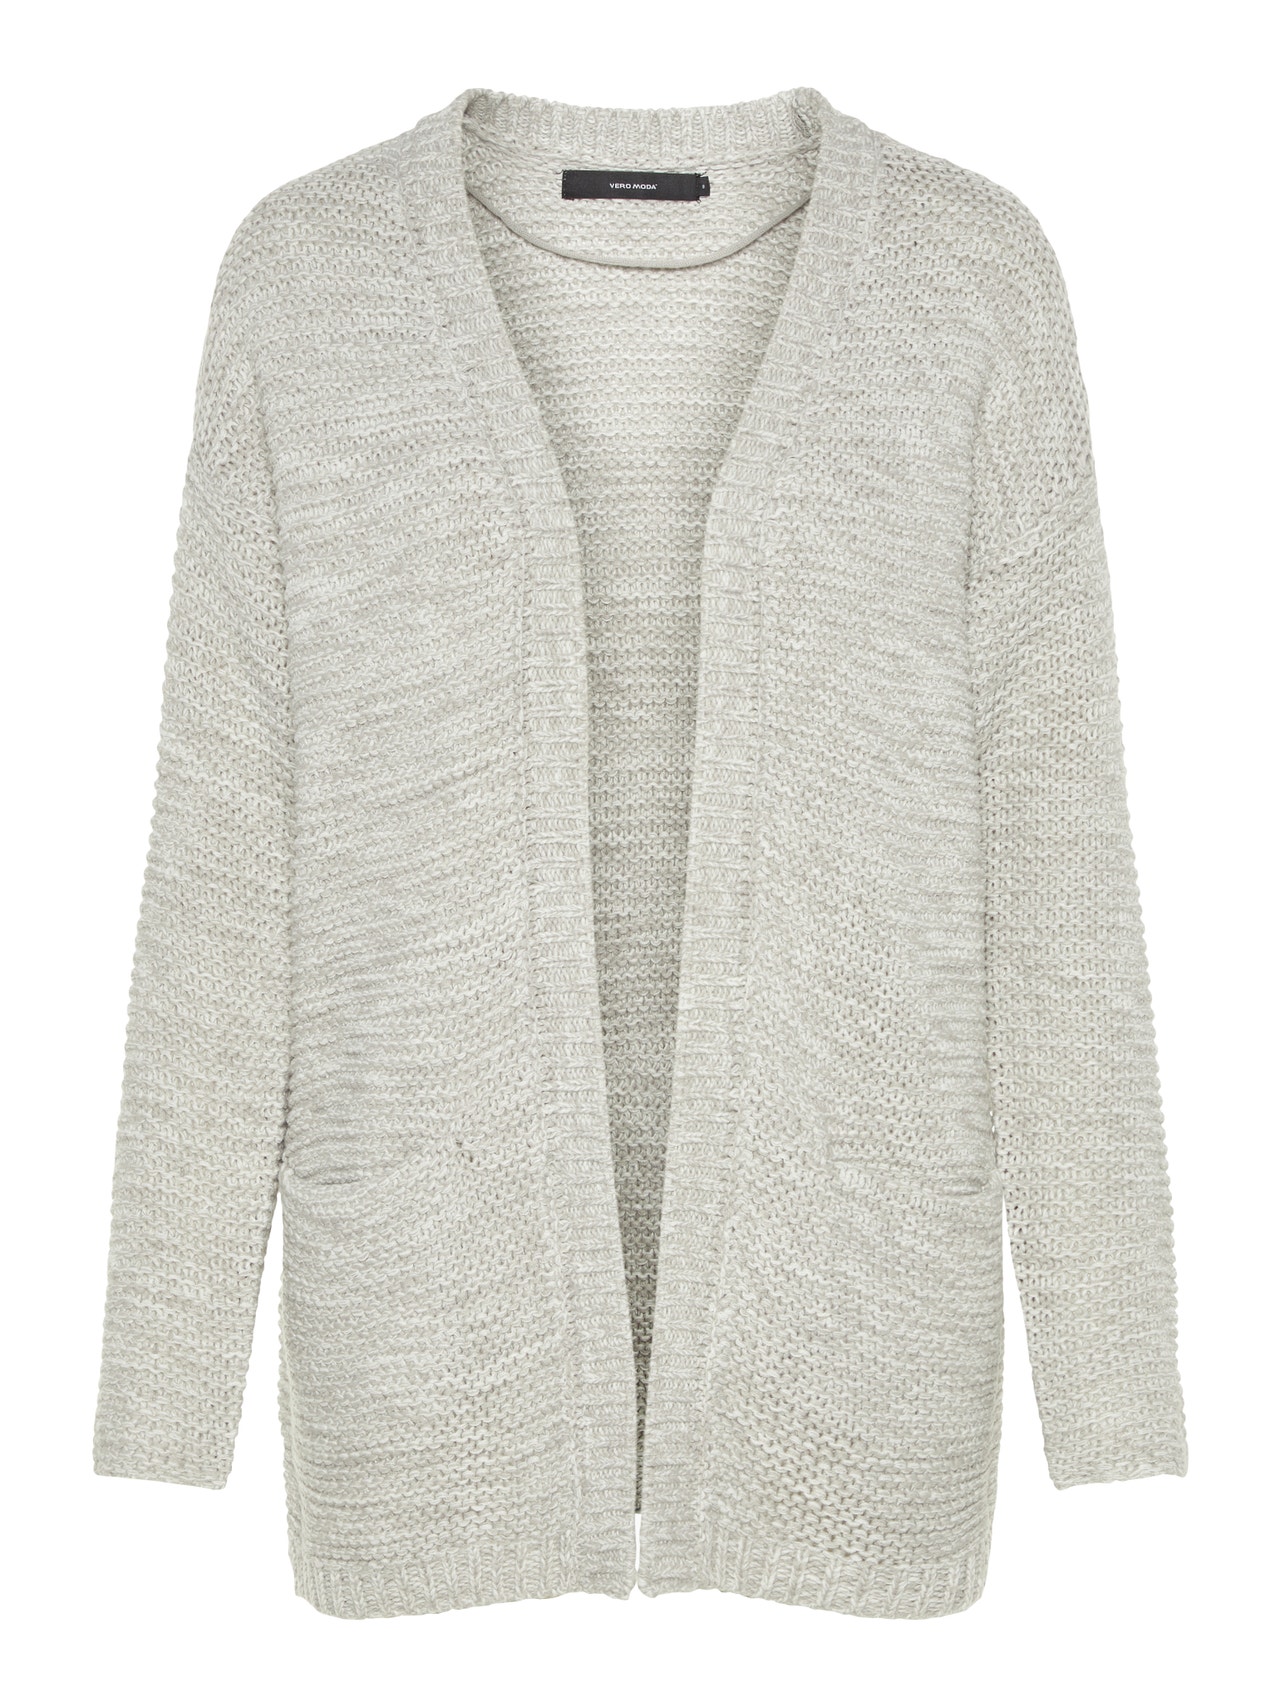 Vero Moda VMNO Knit Cardigan -Light Grey Melange - 10183605